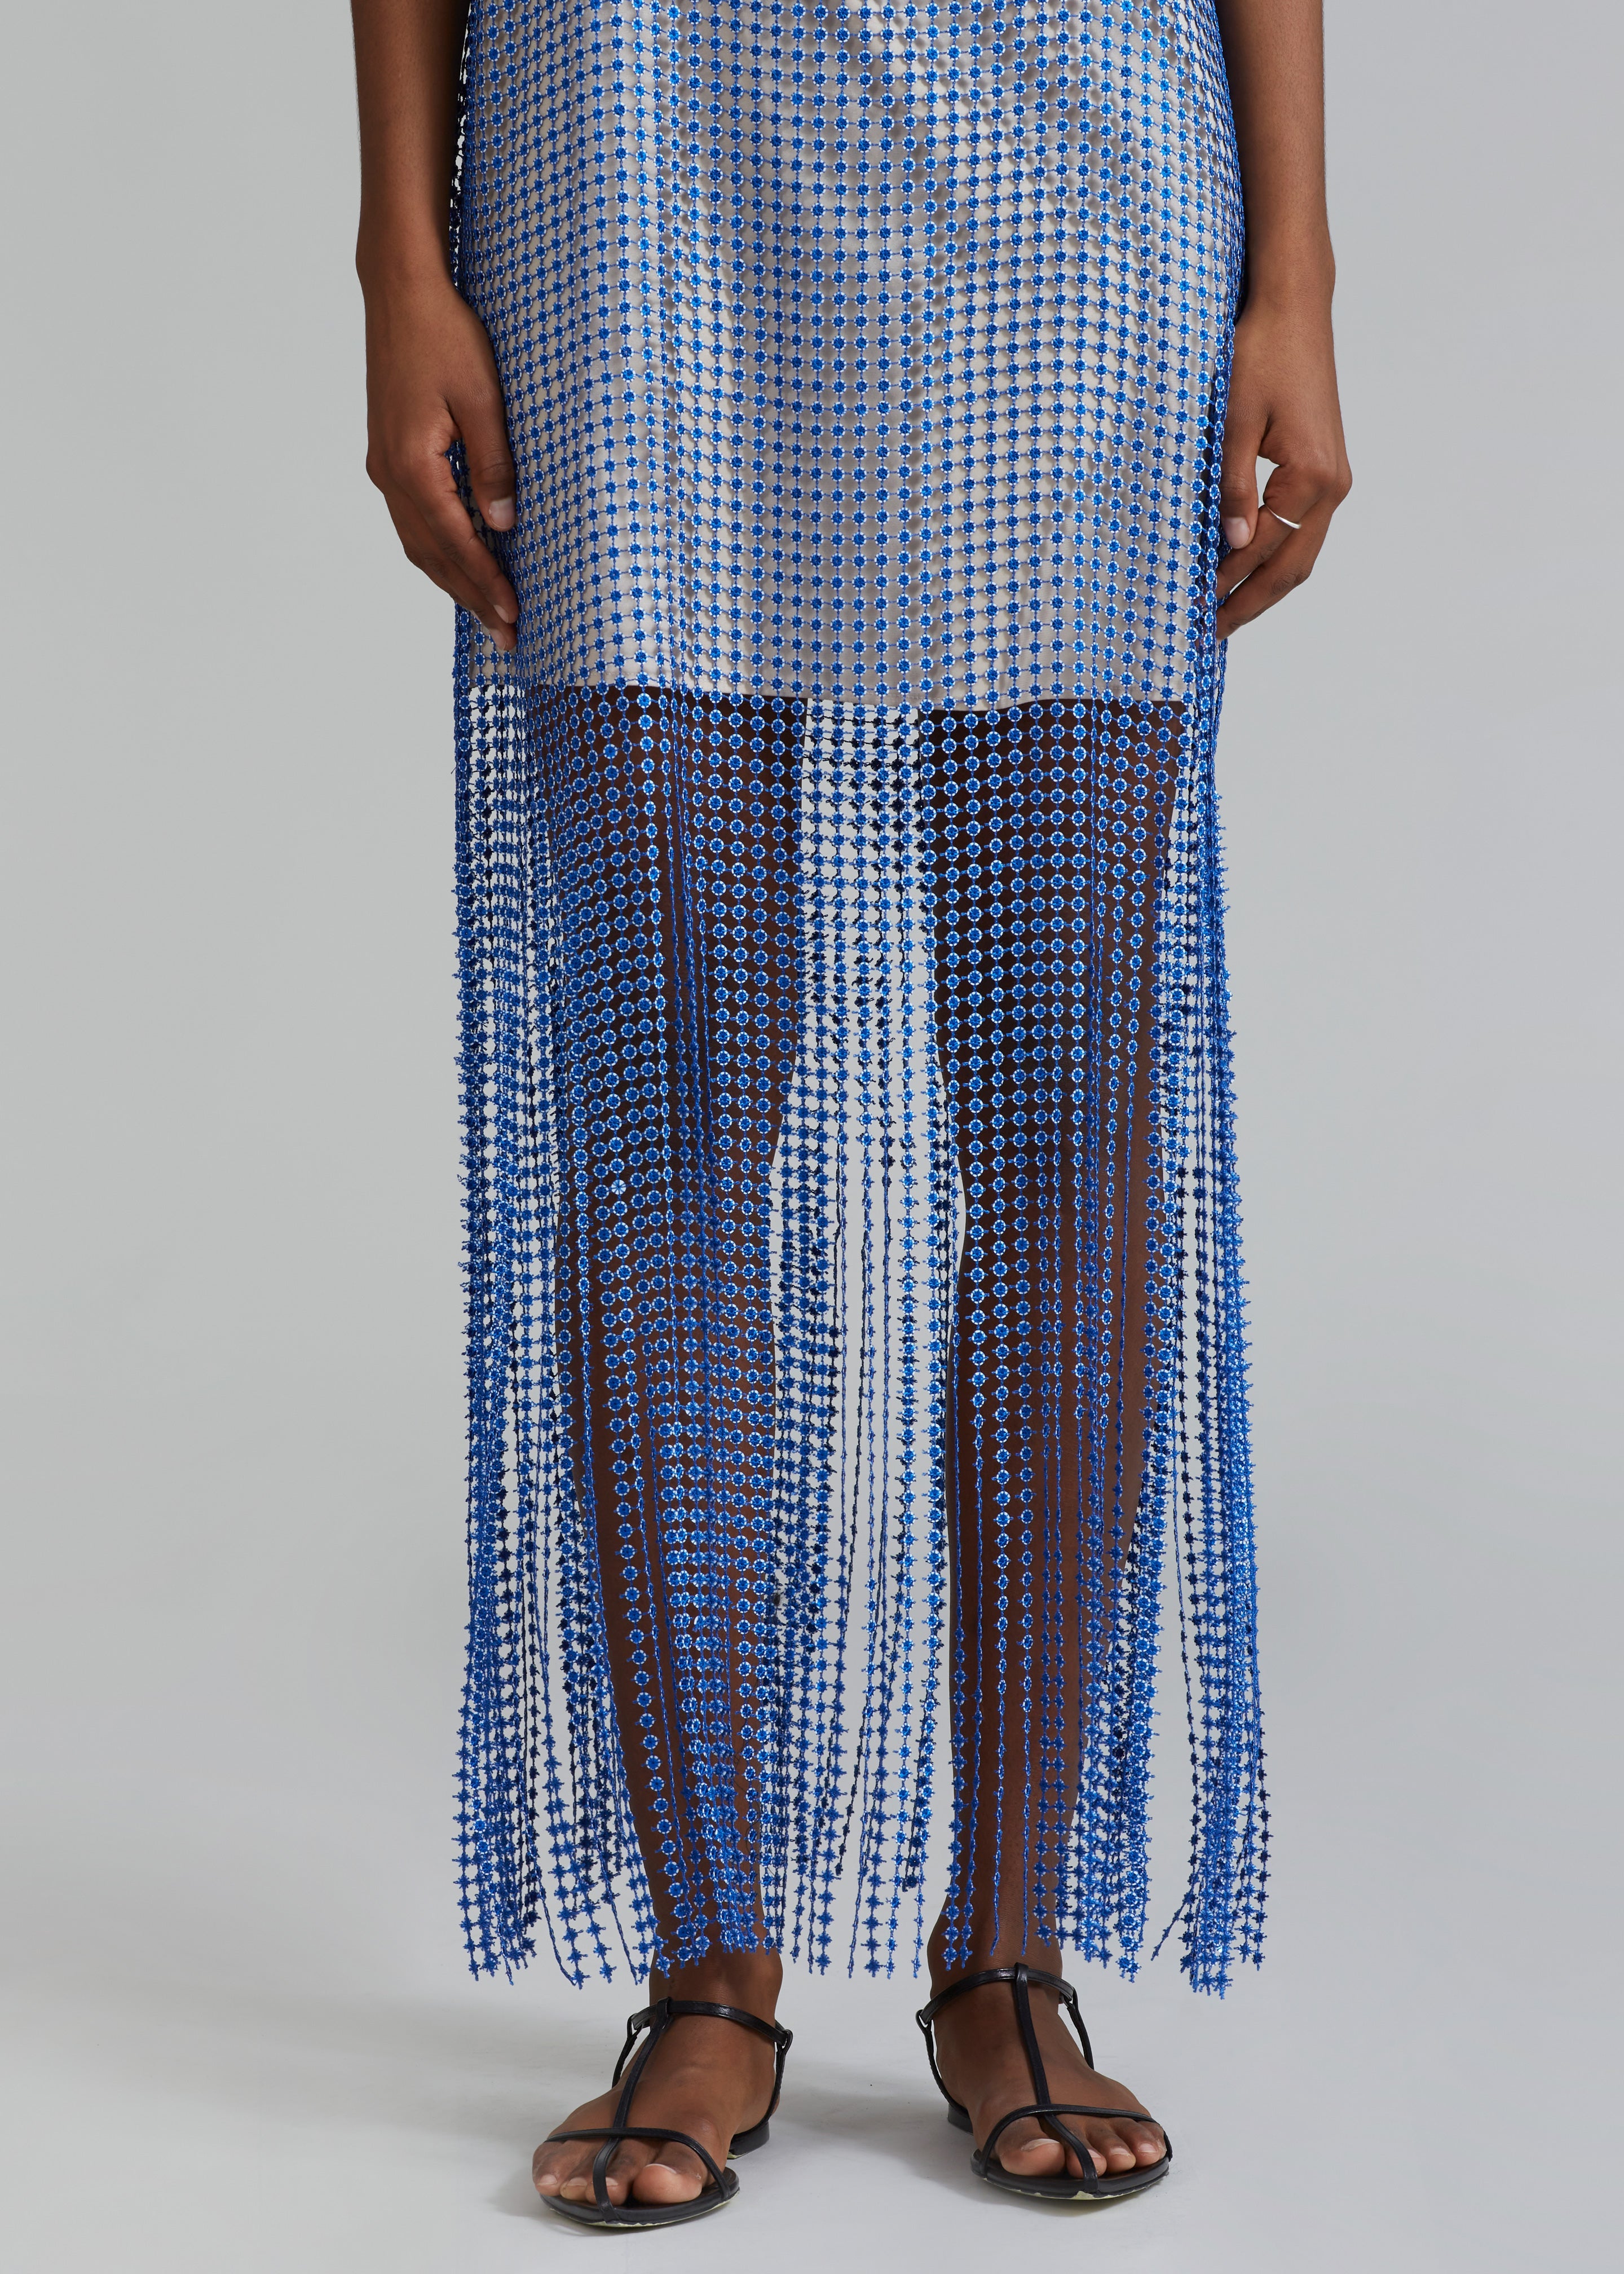 REMAIN Sequin Lace Fringe Dress - Surf The Web Comb. - 2